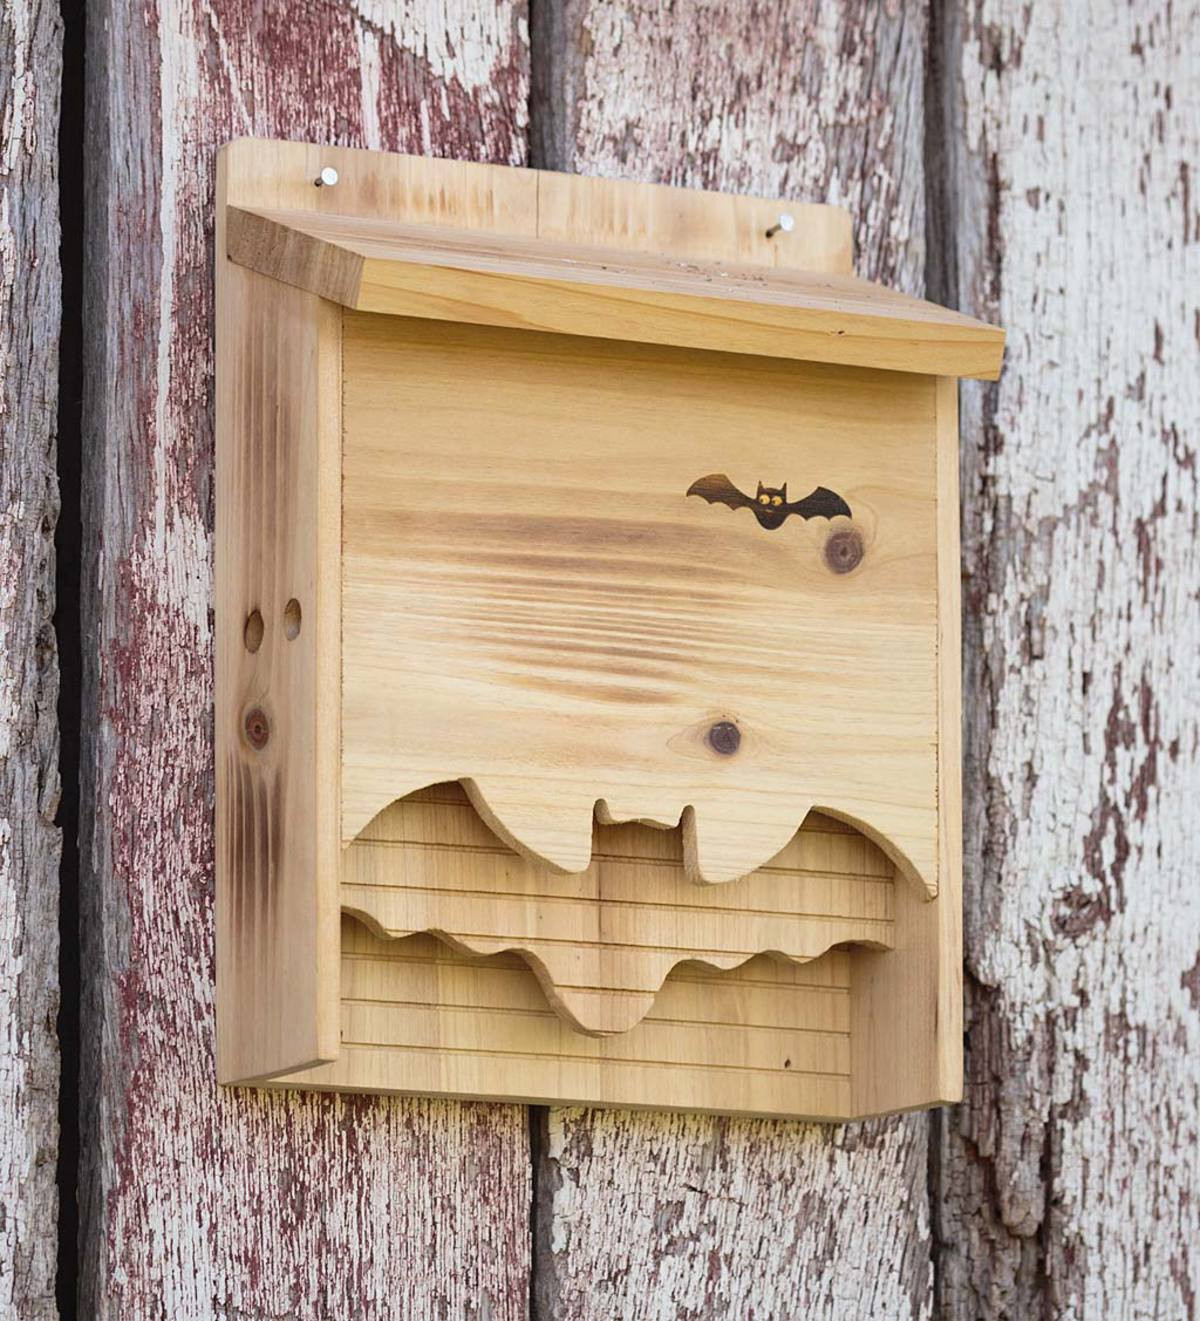 DIY Bat House Plans
 Small Wood Bat House